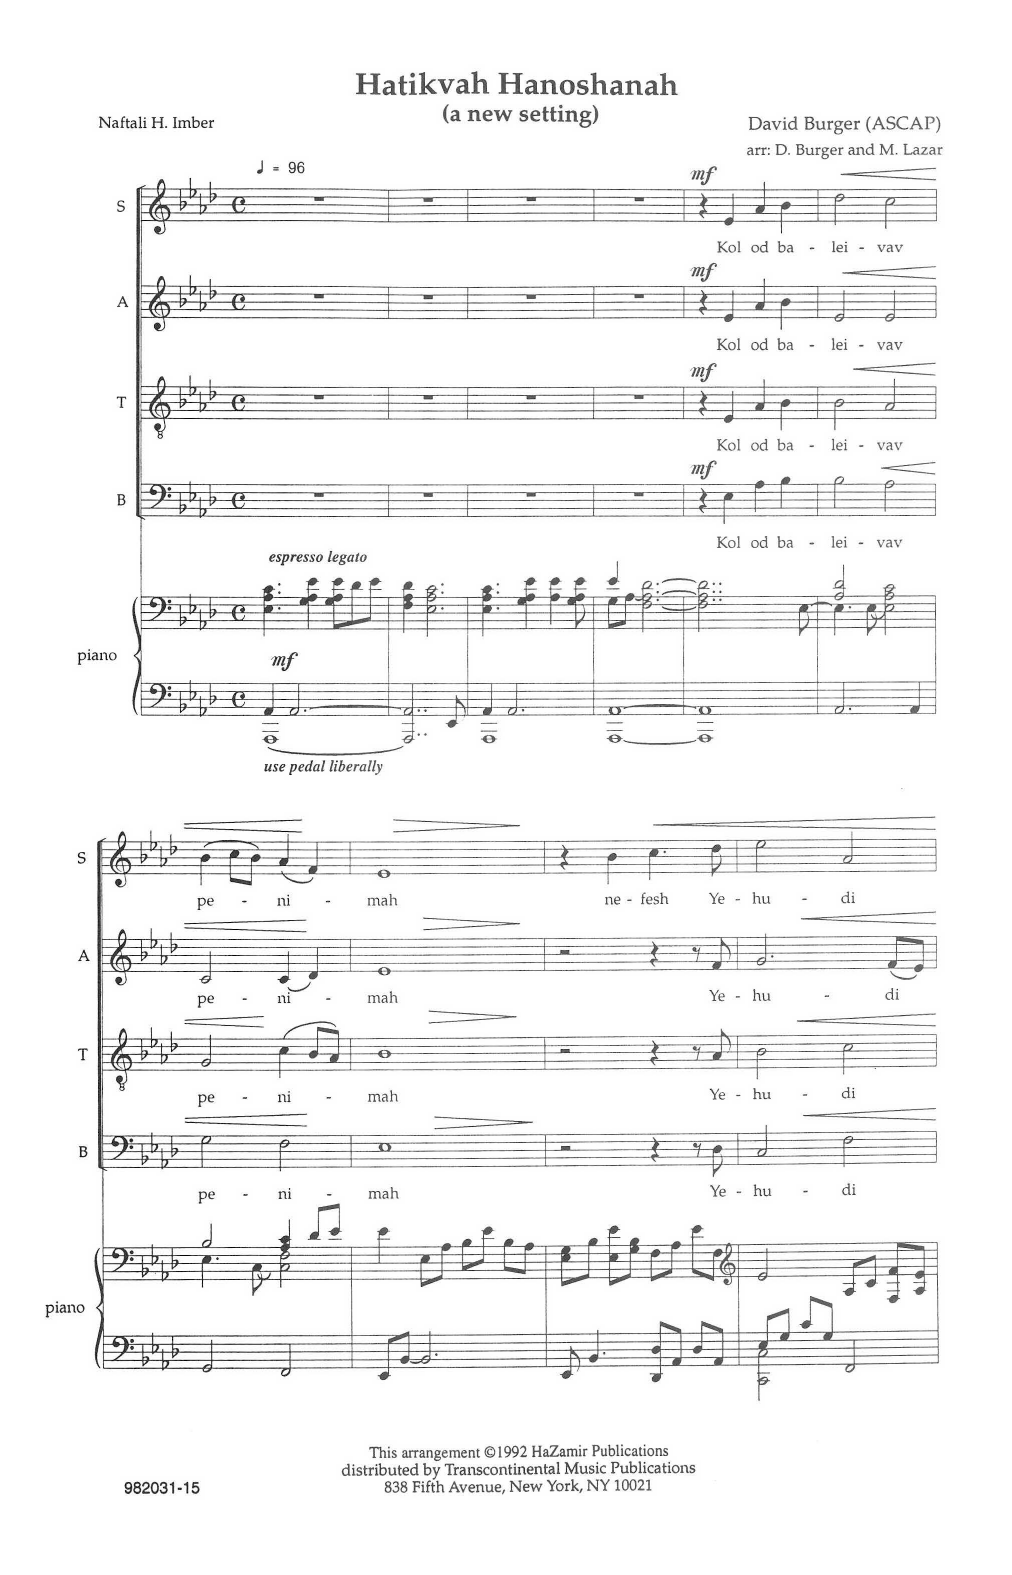 David Burger Hatikvah Hanoshanah Sheet Music Notes & Chords for SATB Choir - Download or Print PDF